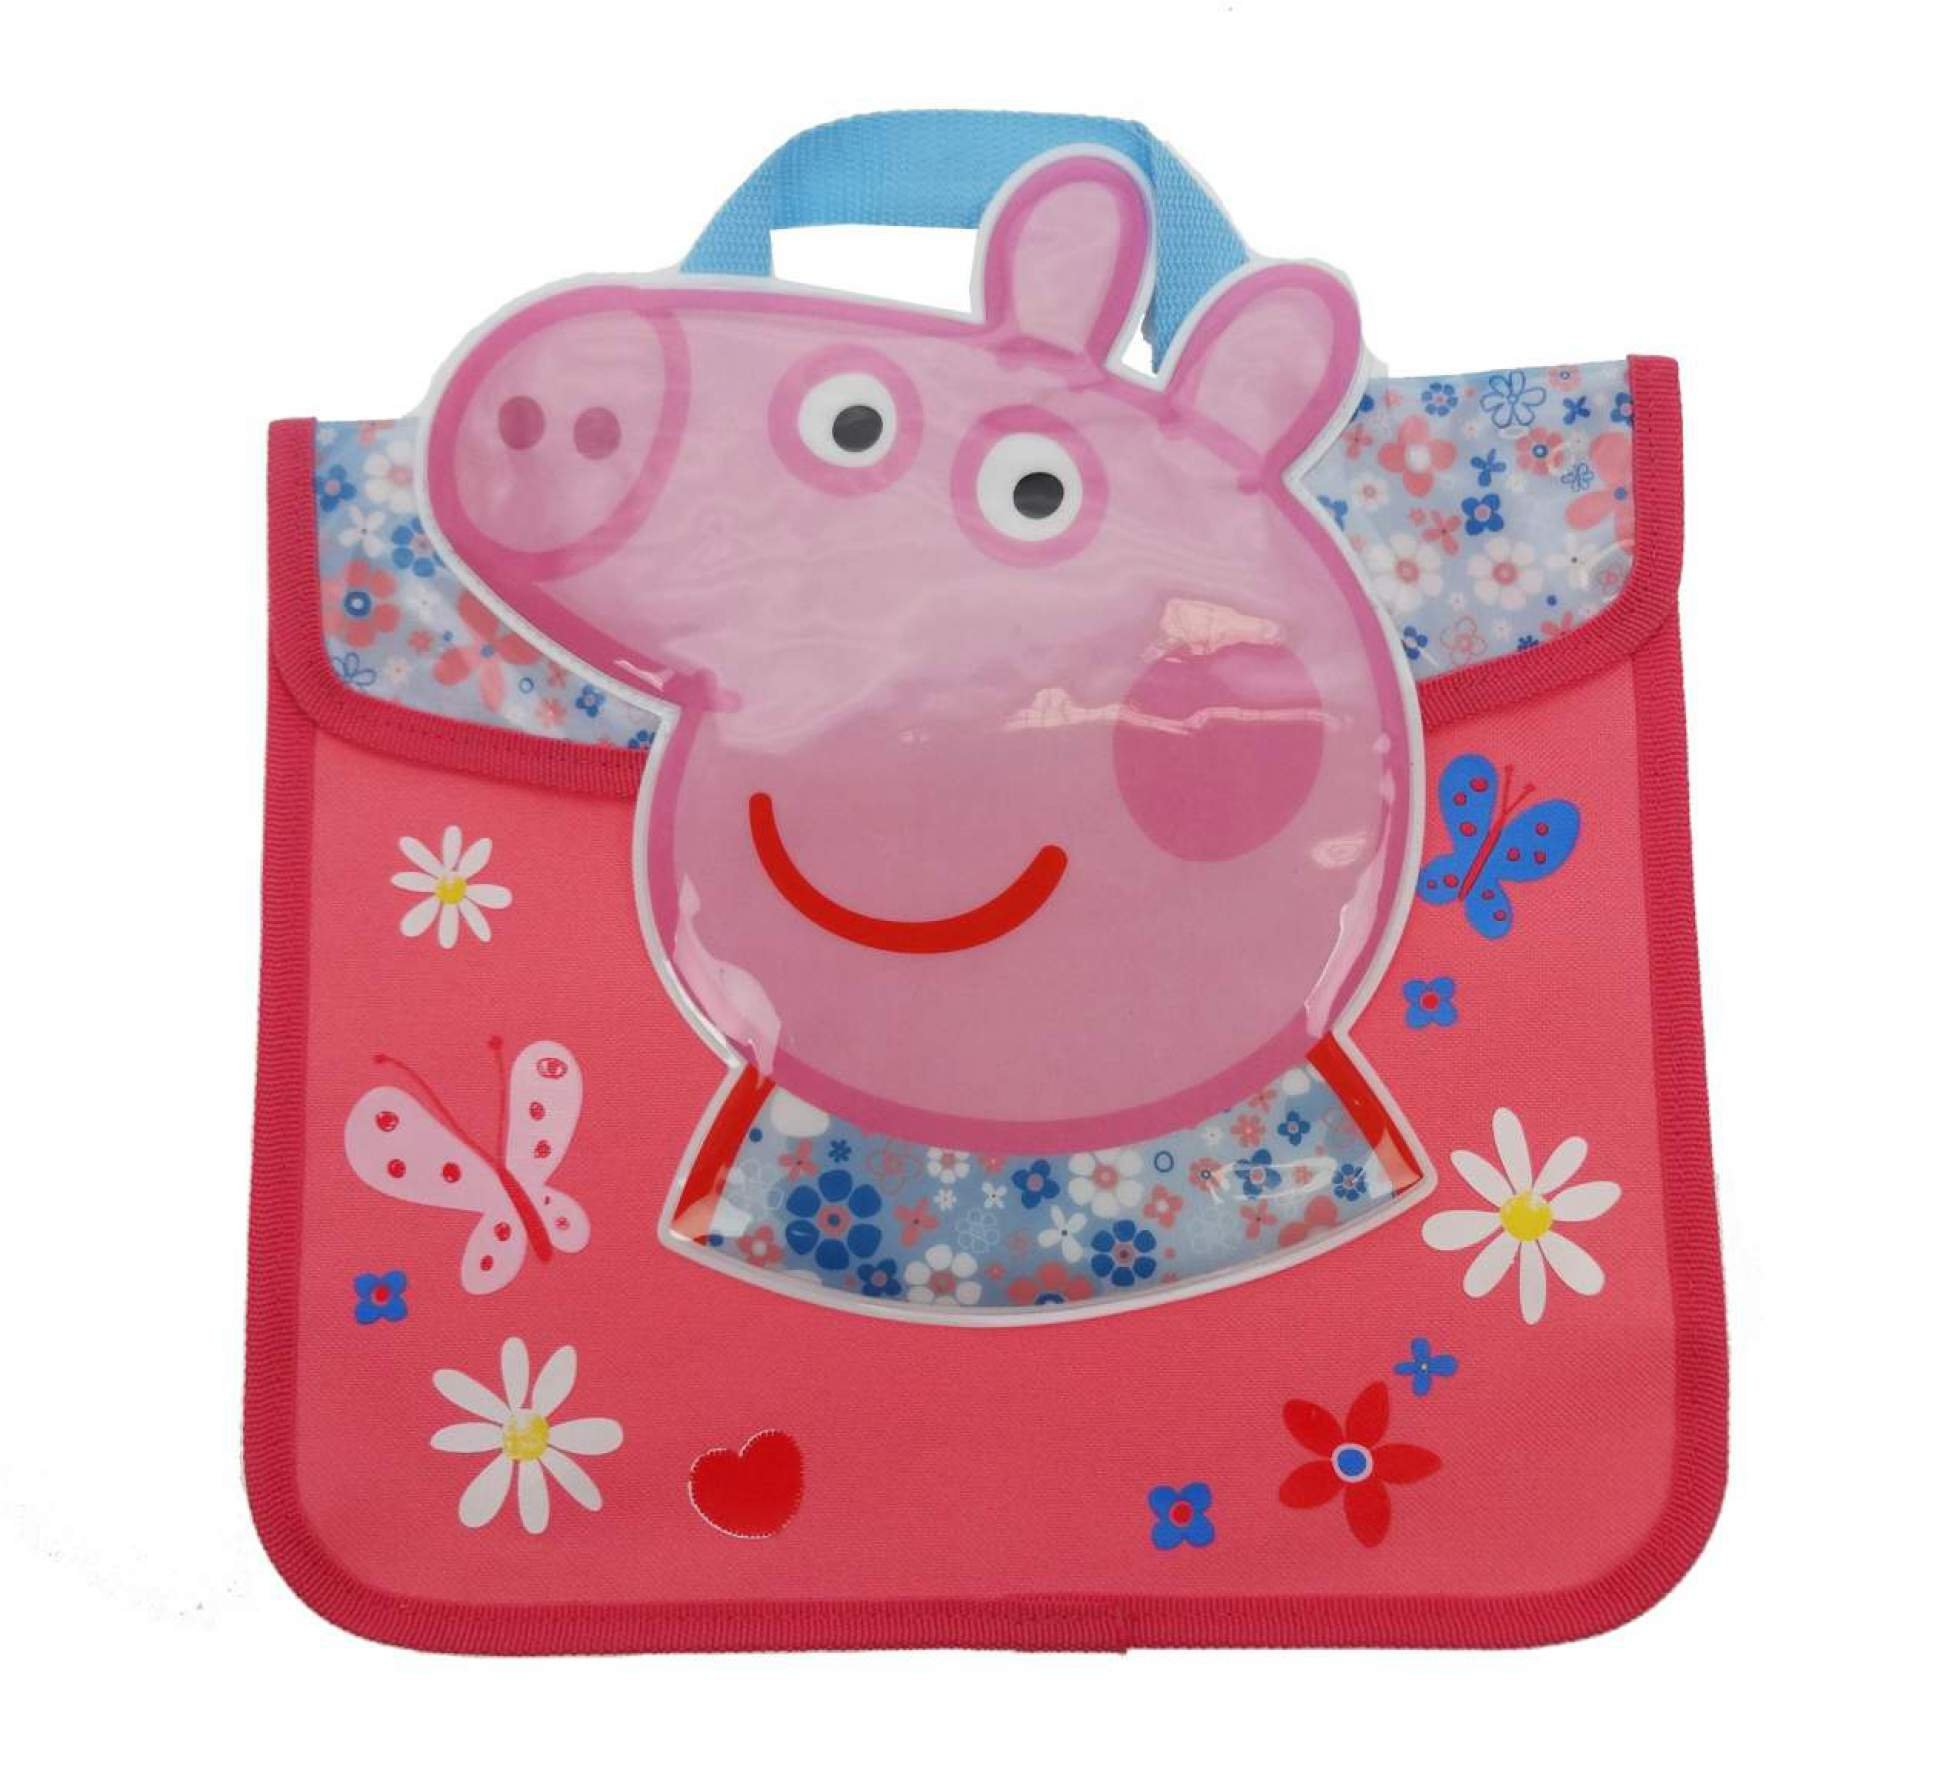 Peppa Pig 'Home Sweet Home' School Book Bag